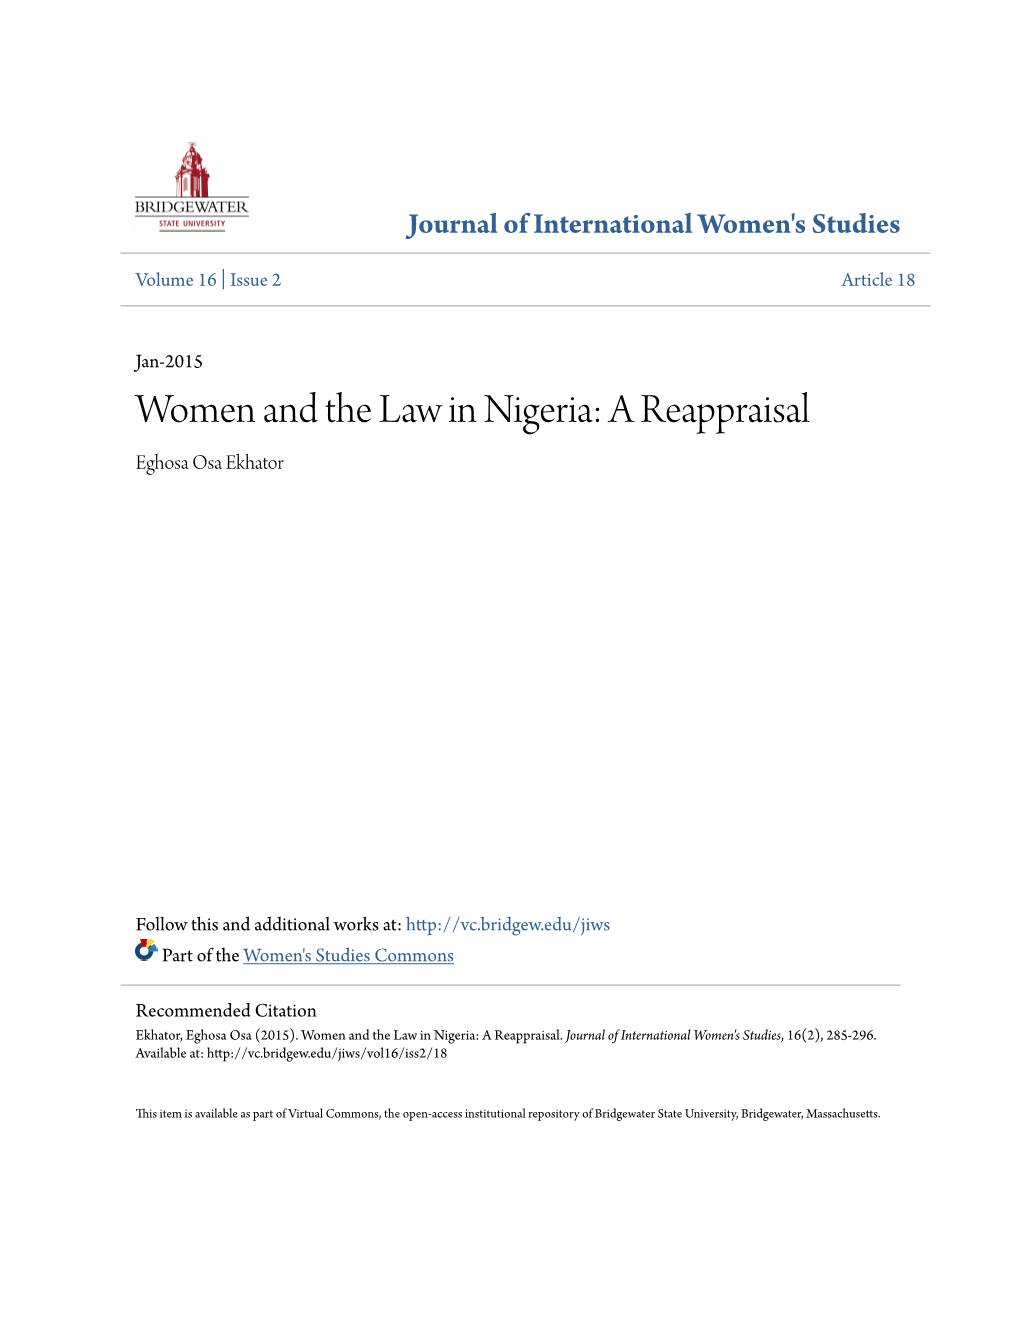 Women and the Law in Nigeria: a Reappraisal Eghosa Osa Ekhator